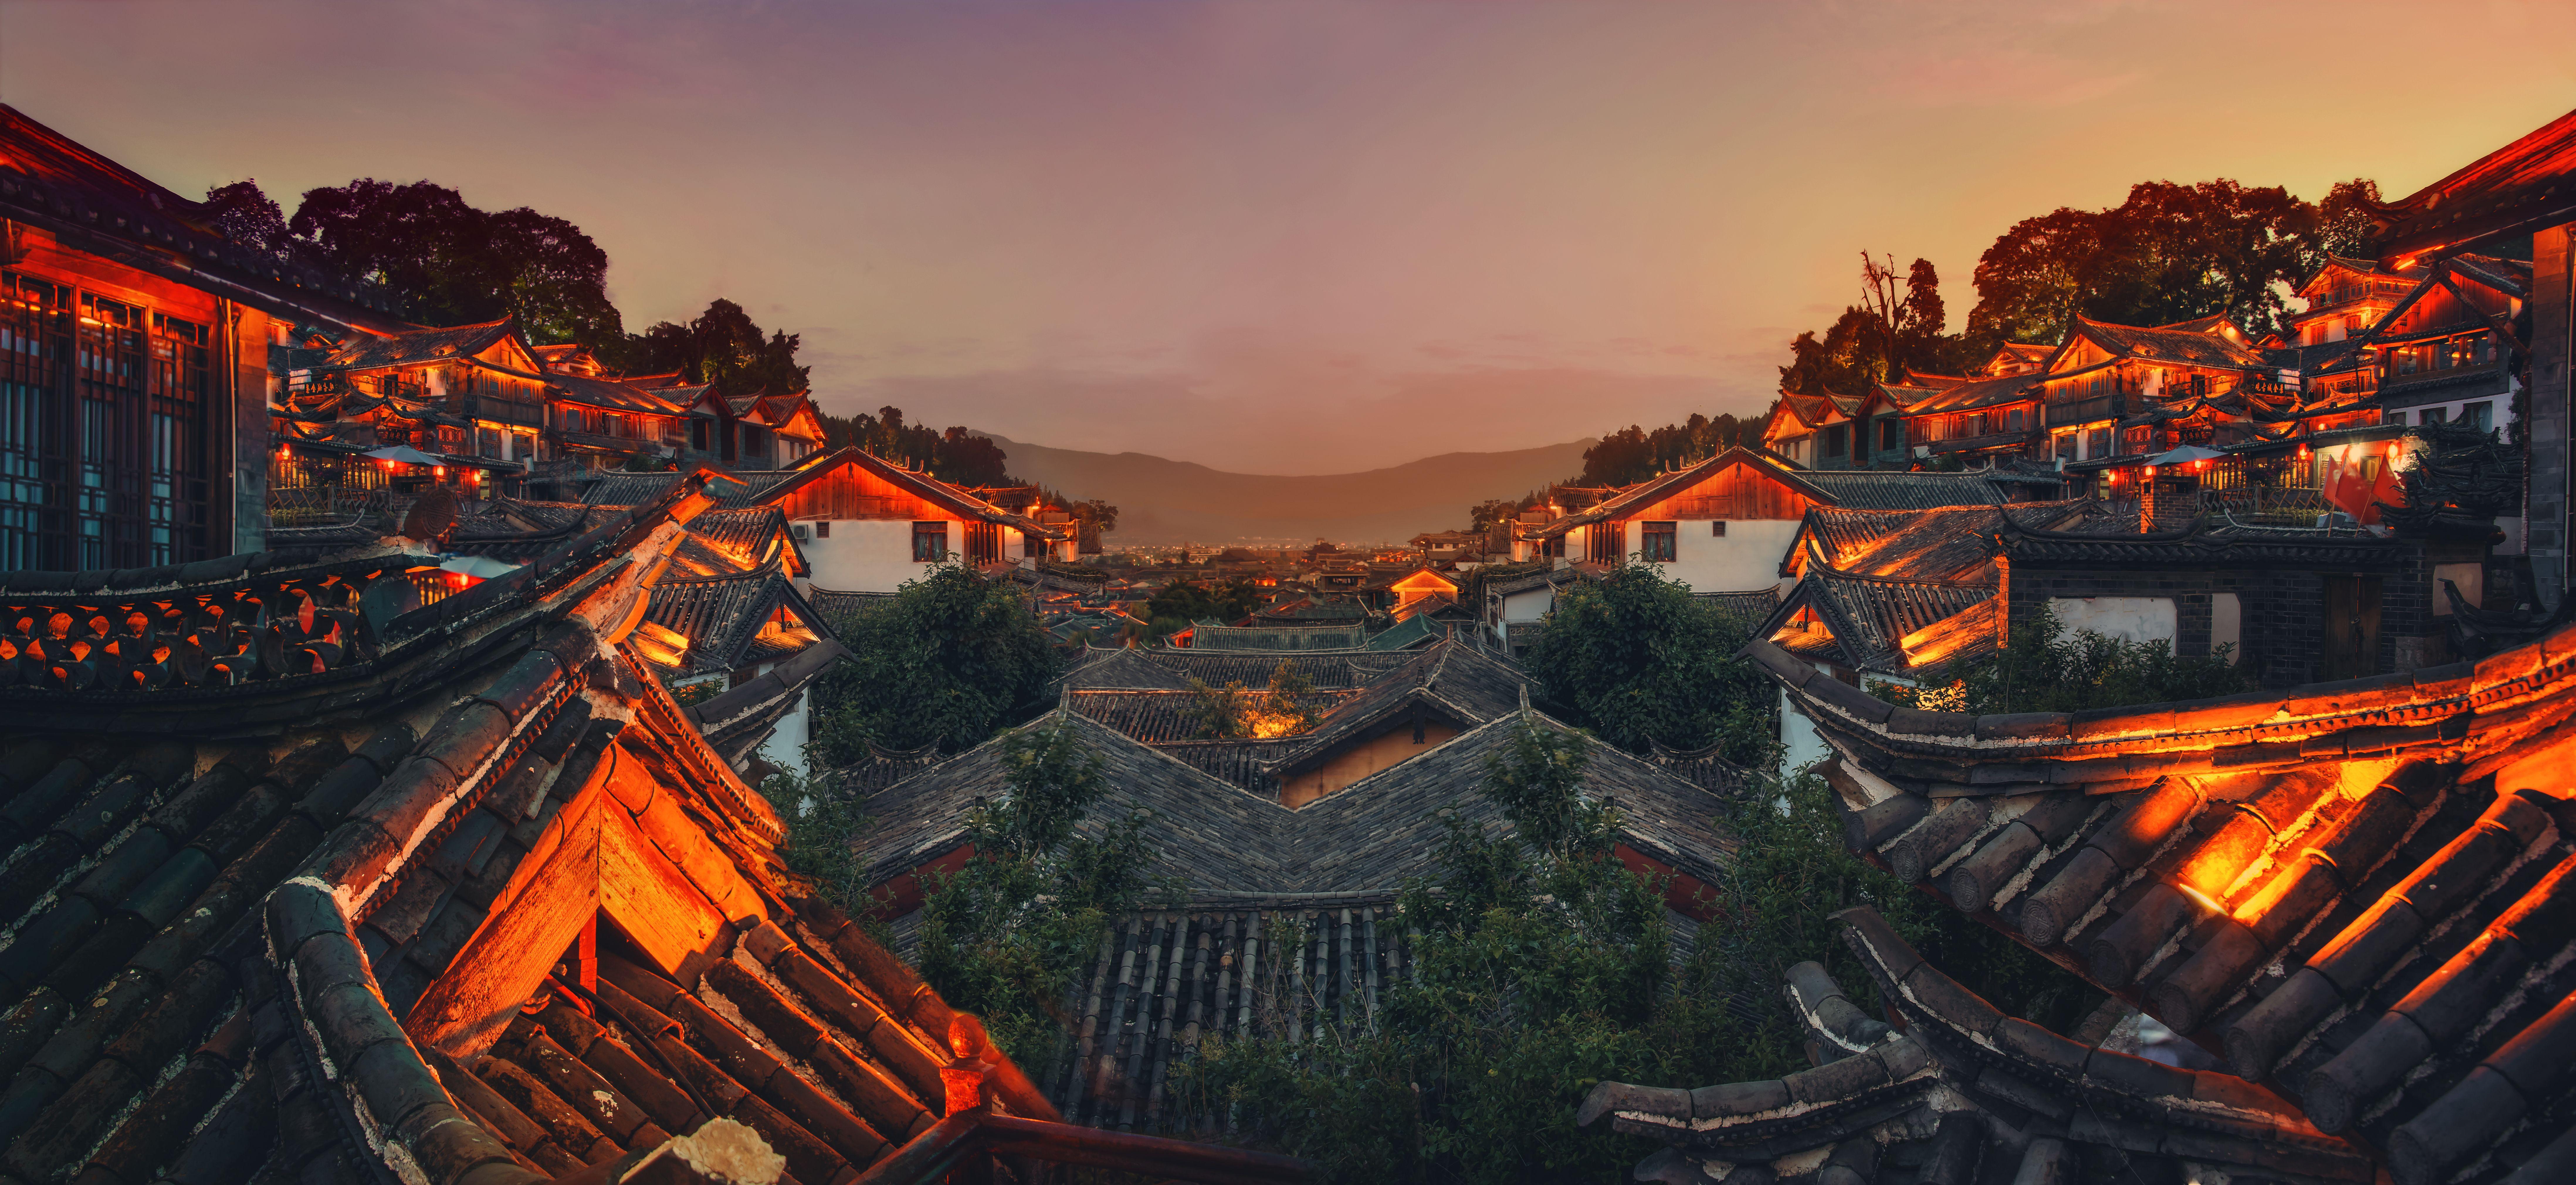 Yunnan HD Wallpaper and Background Image